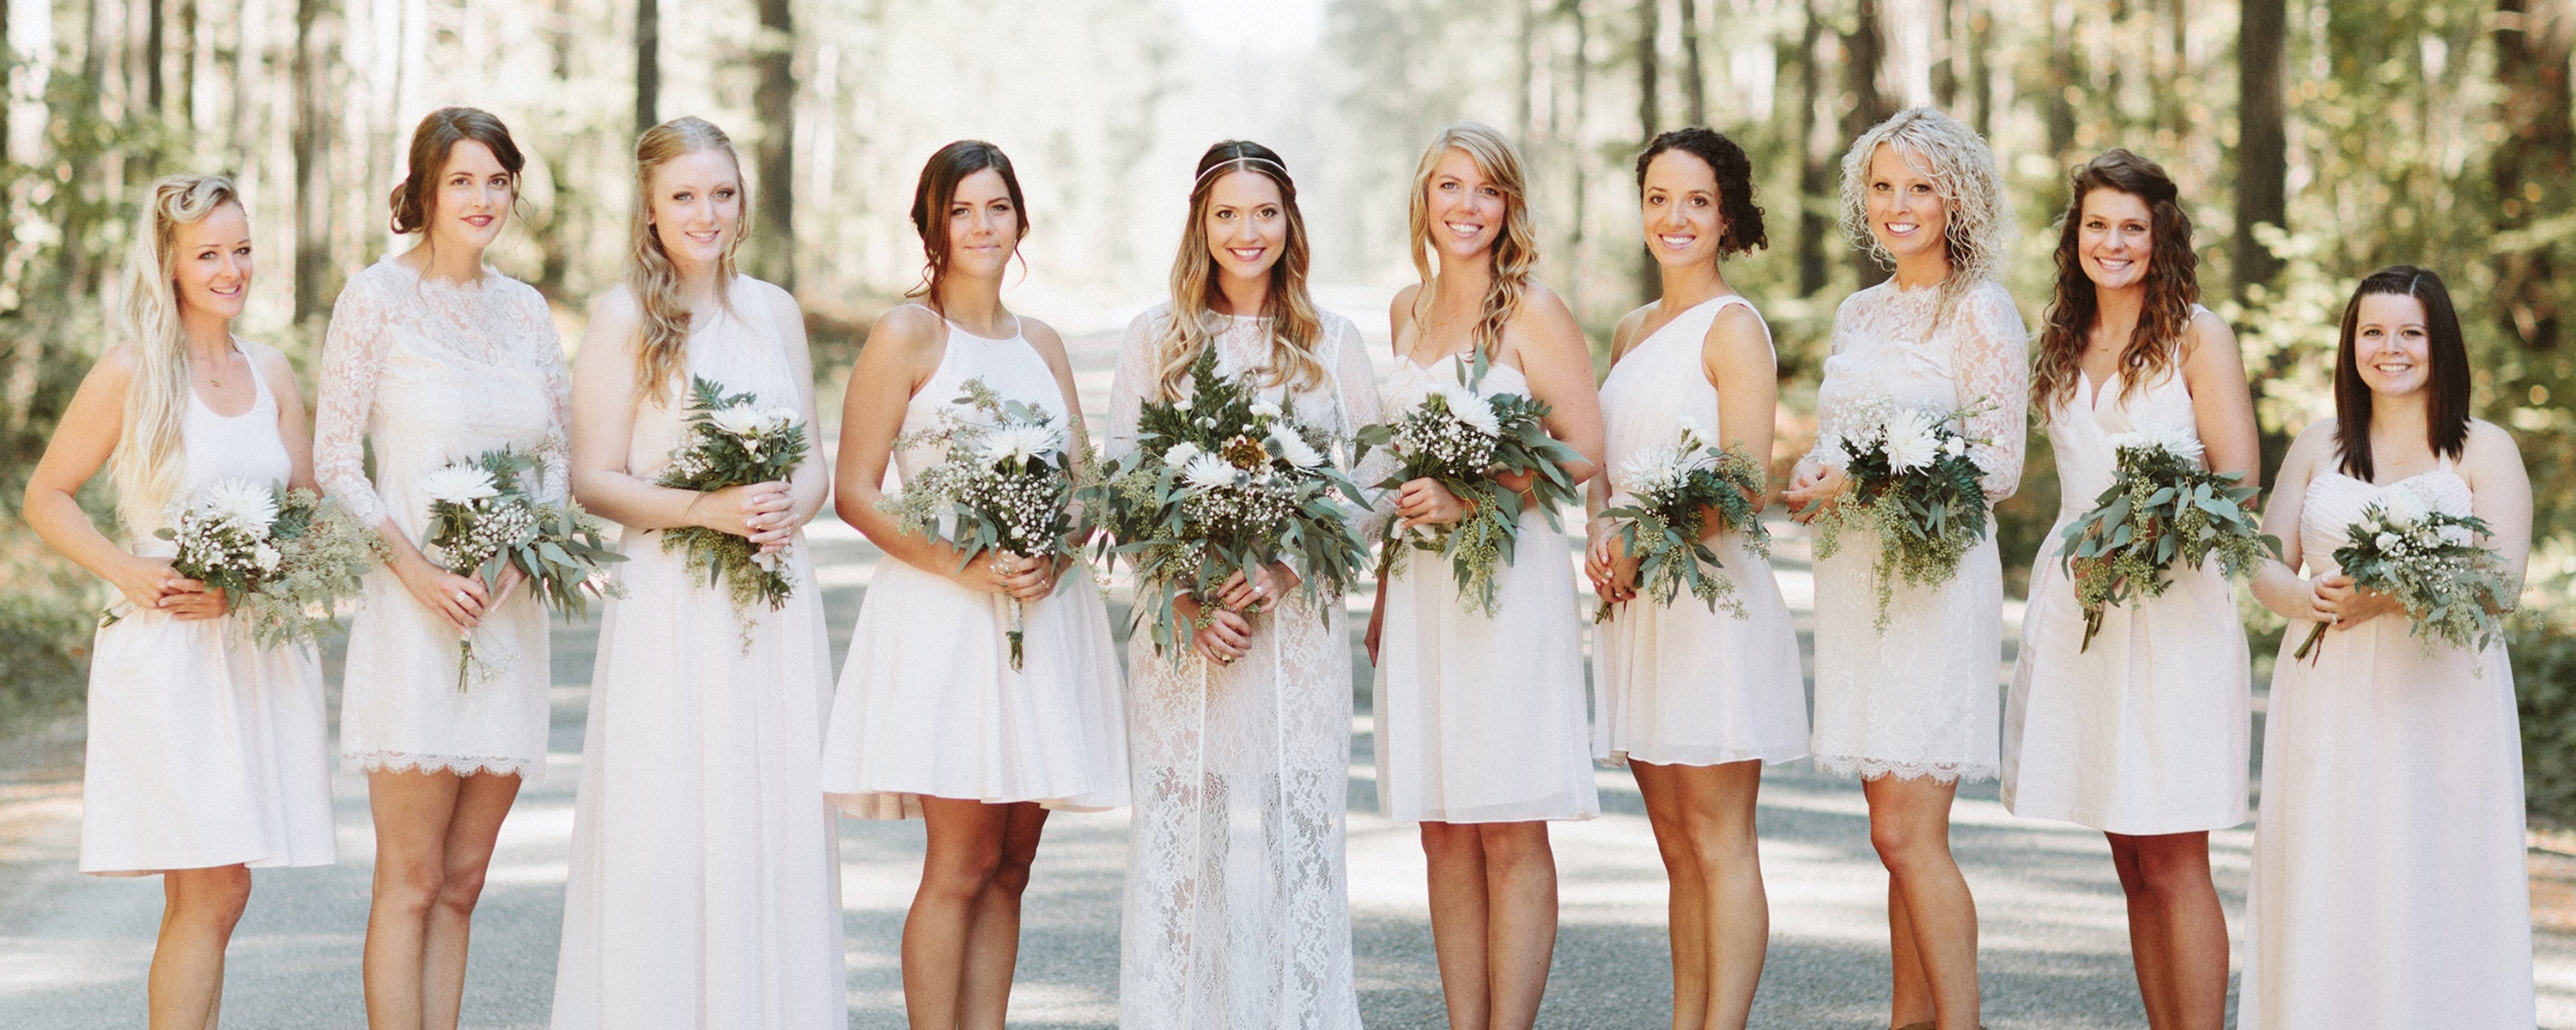 Stunning Bridesmaid Dress Trends